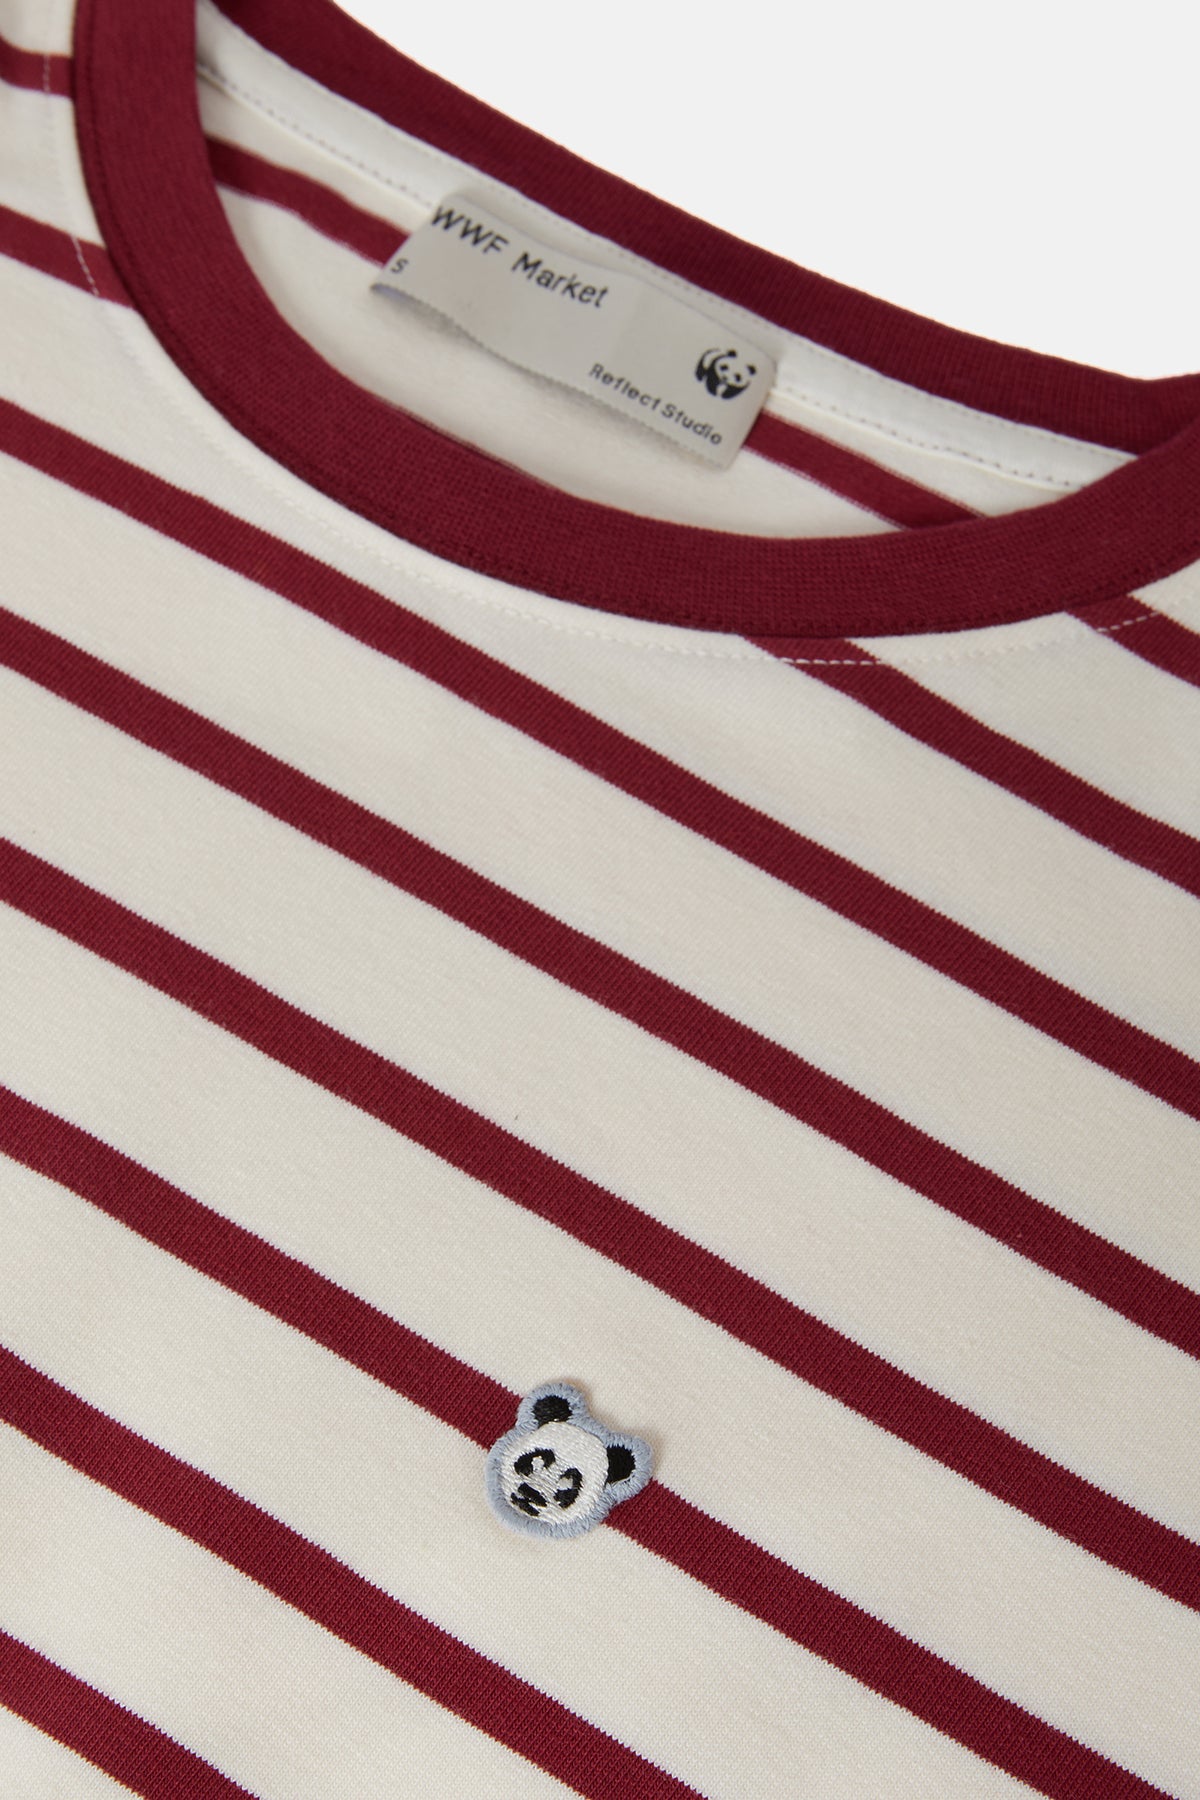 Panda Supreme Çizgili Uzun Kollu T-Shirt - Kırmızı/Krem